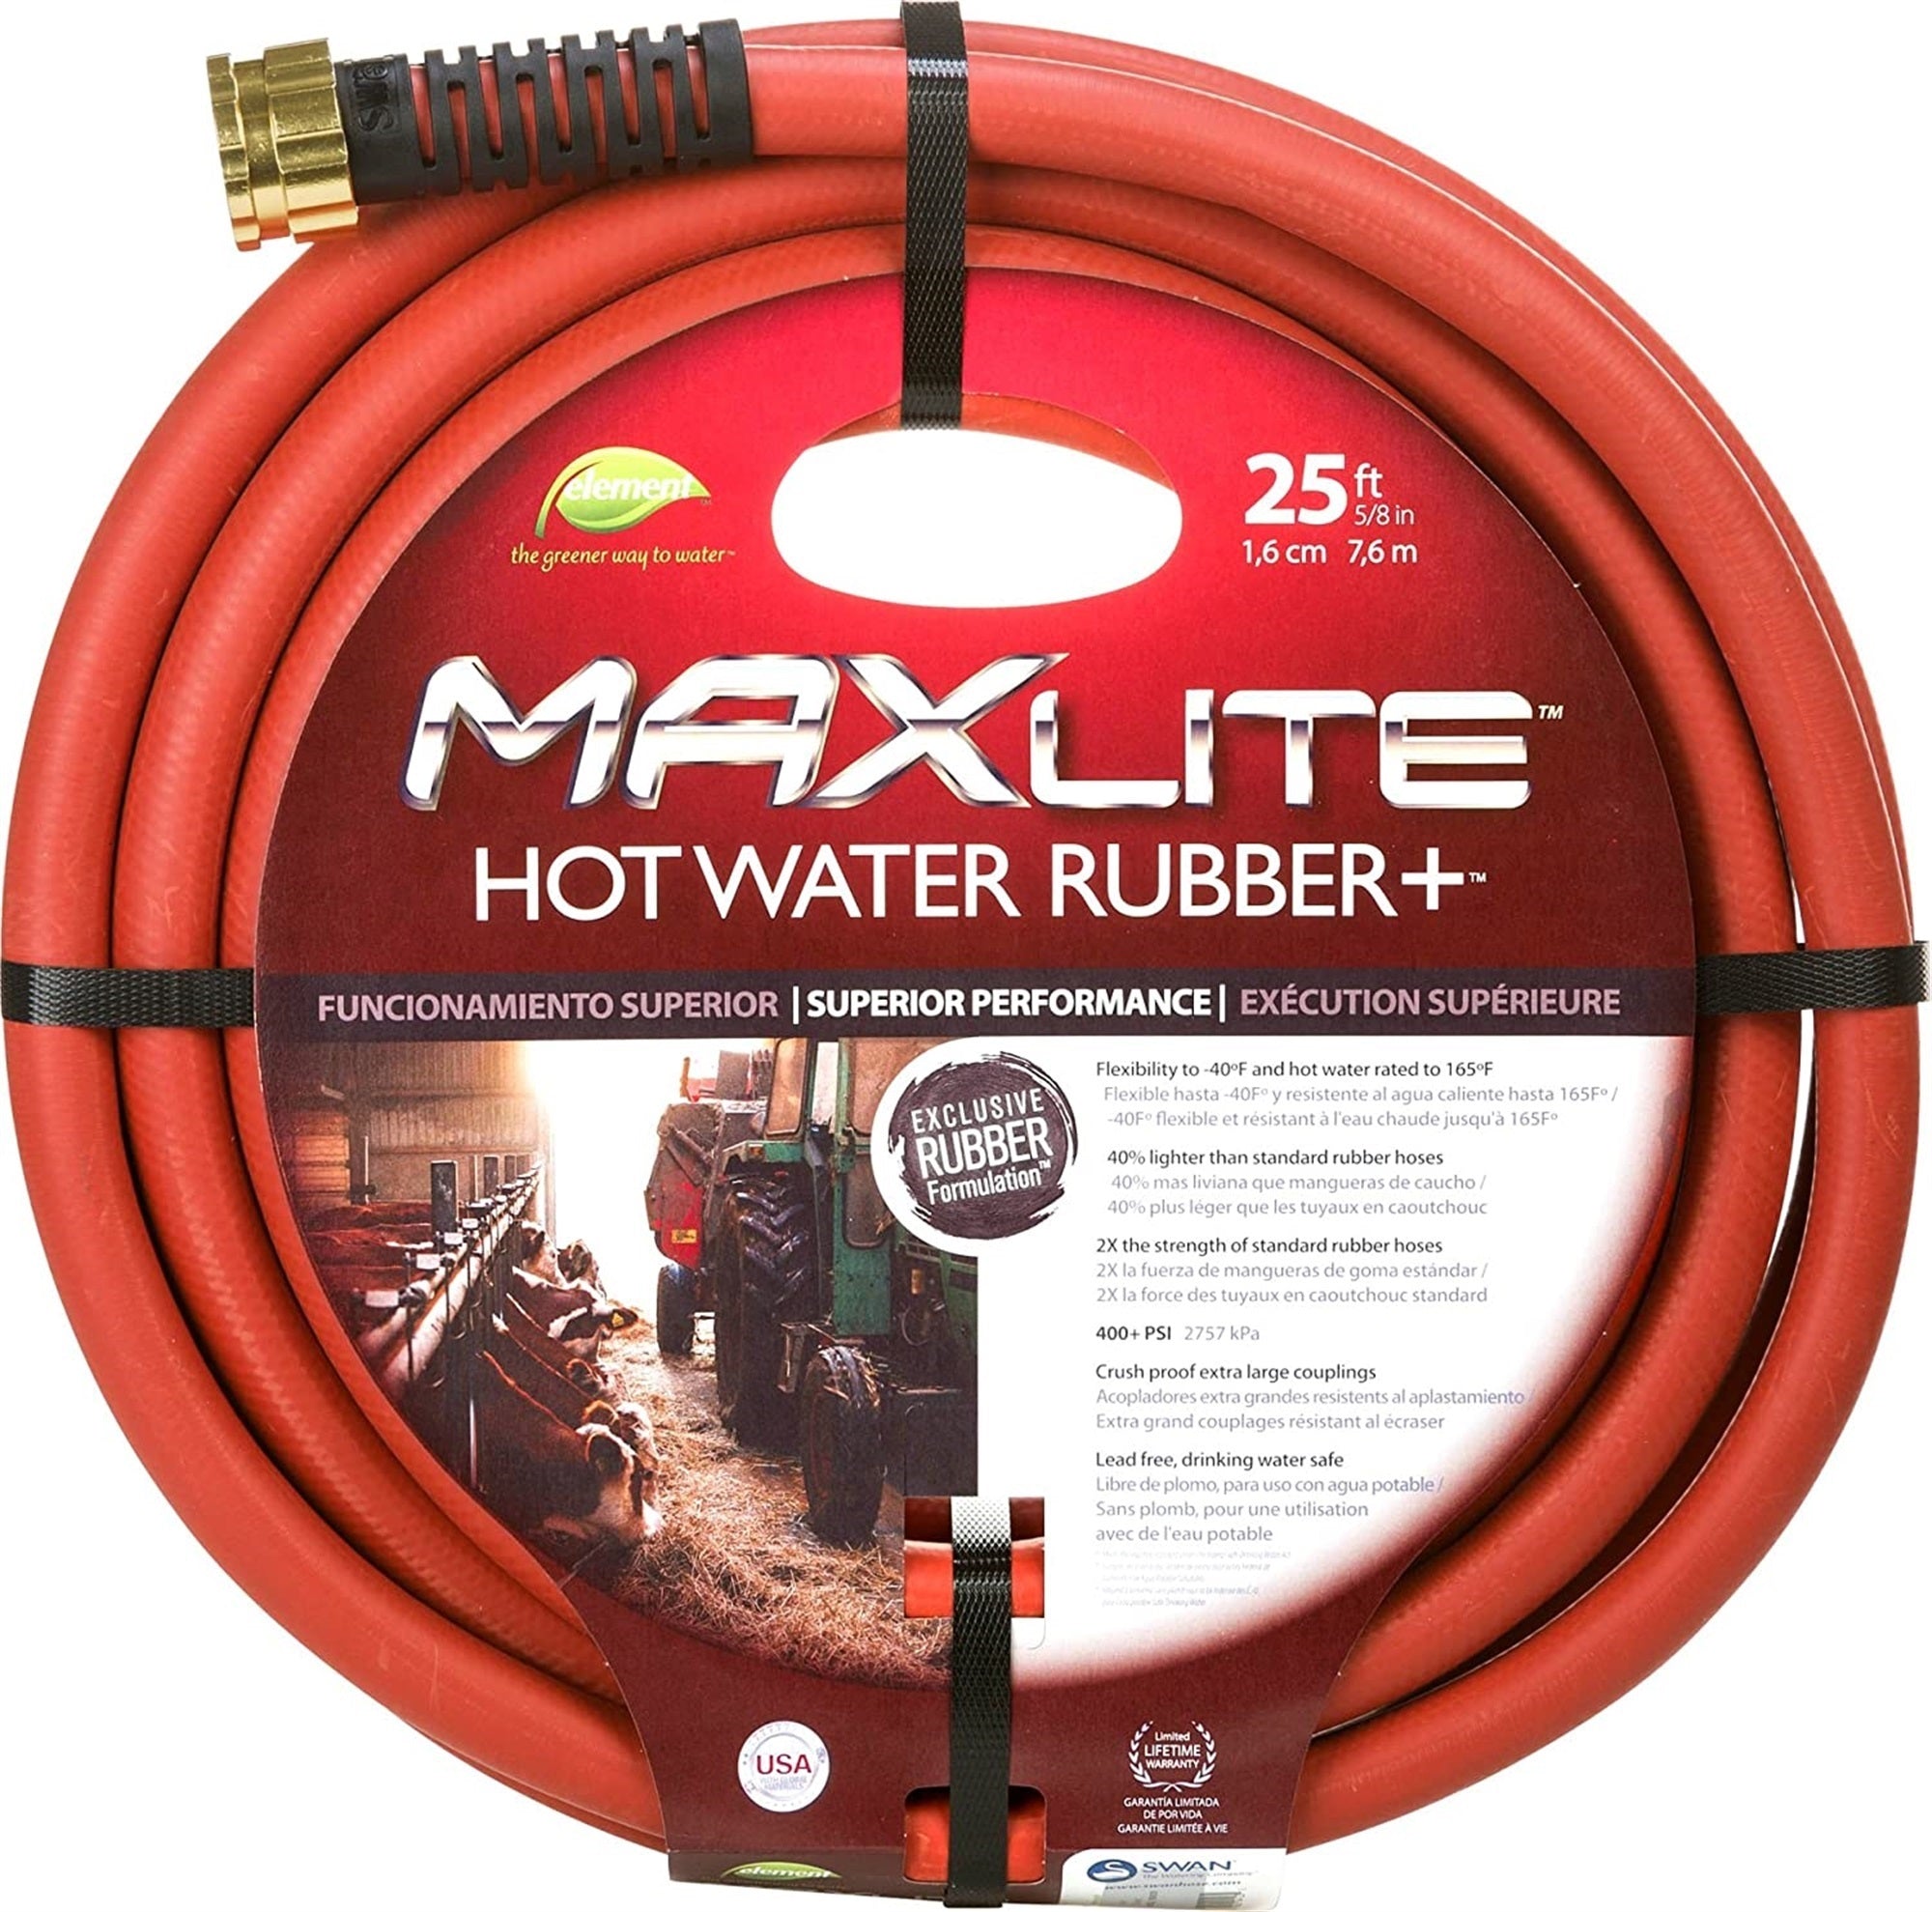 Swan Watering MAXLite Hot Water Rubber+ Hose, Red, 5/8in x 25ft